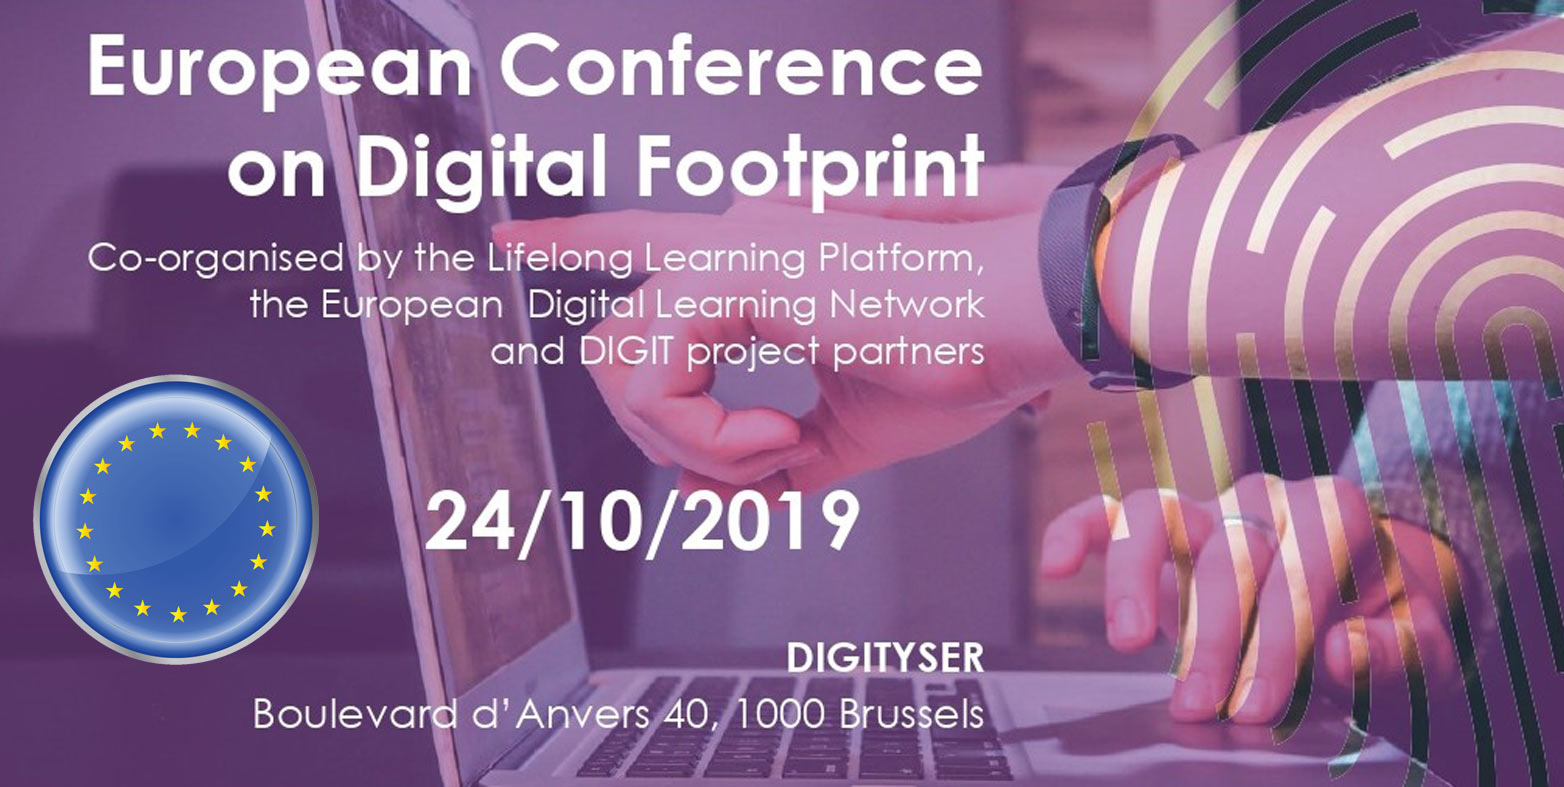 European Conference on Digital Footprint